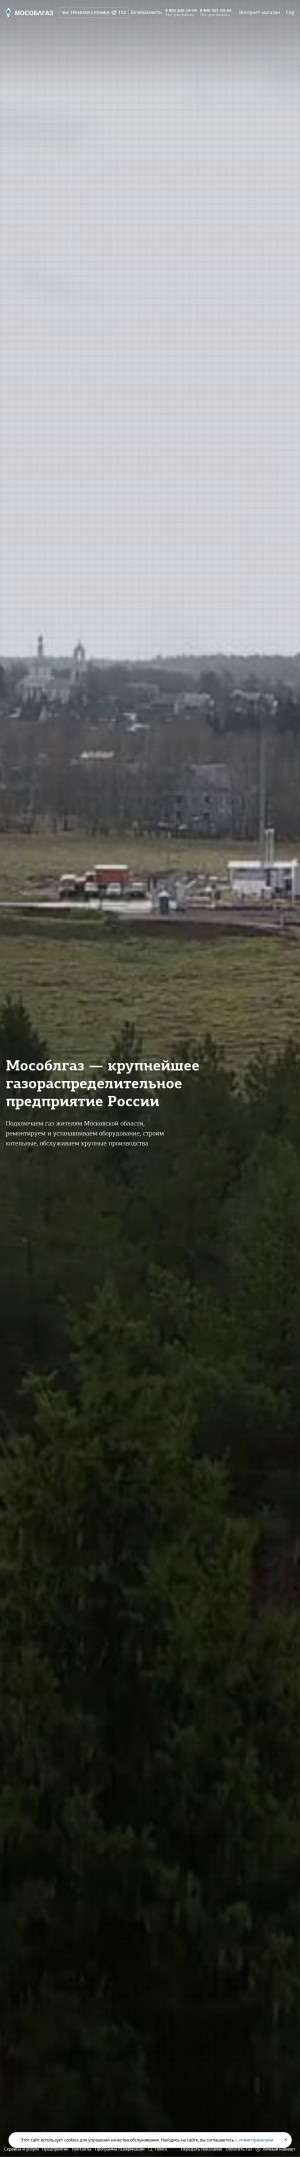 Предпросмотр для www.mosoblgaz.ru — АО Мособлгаз Север